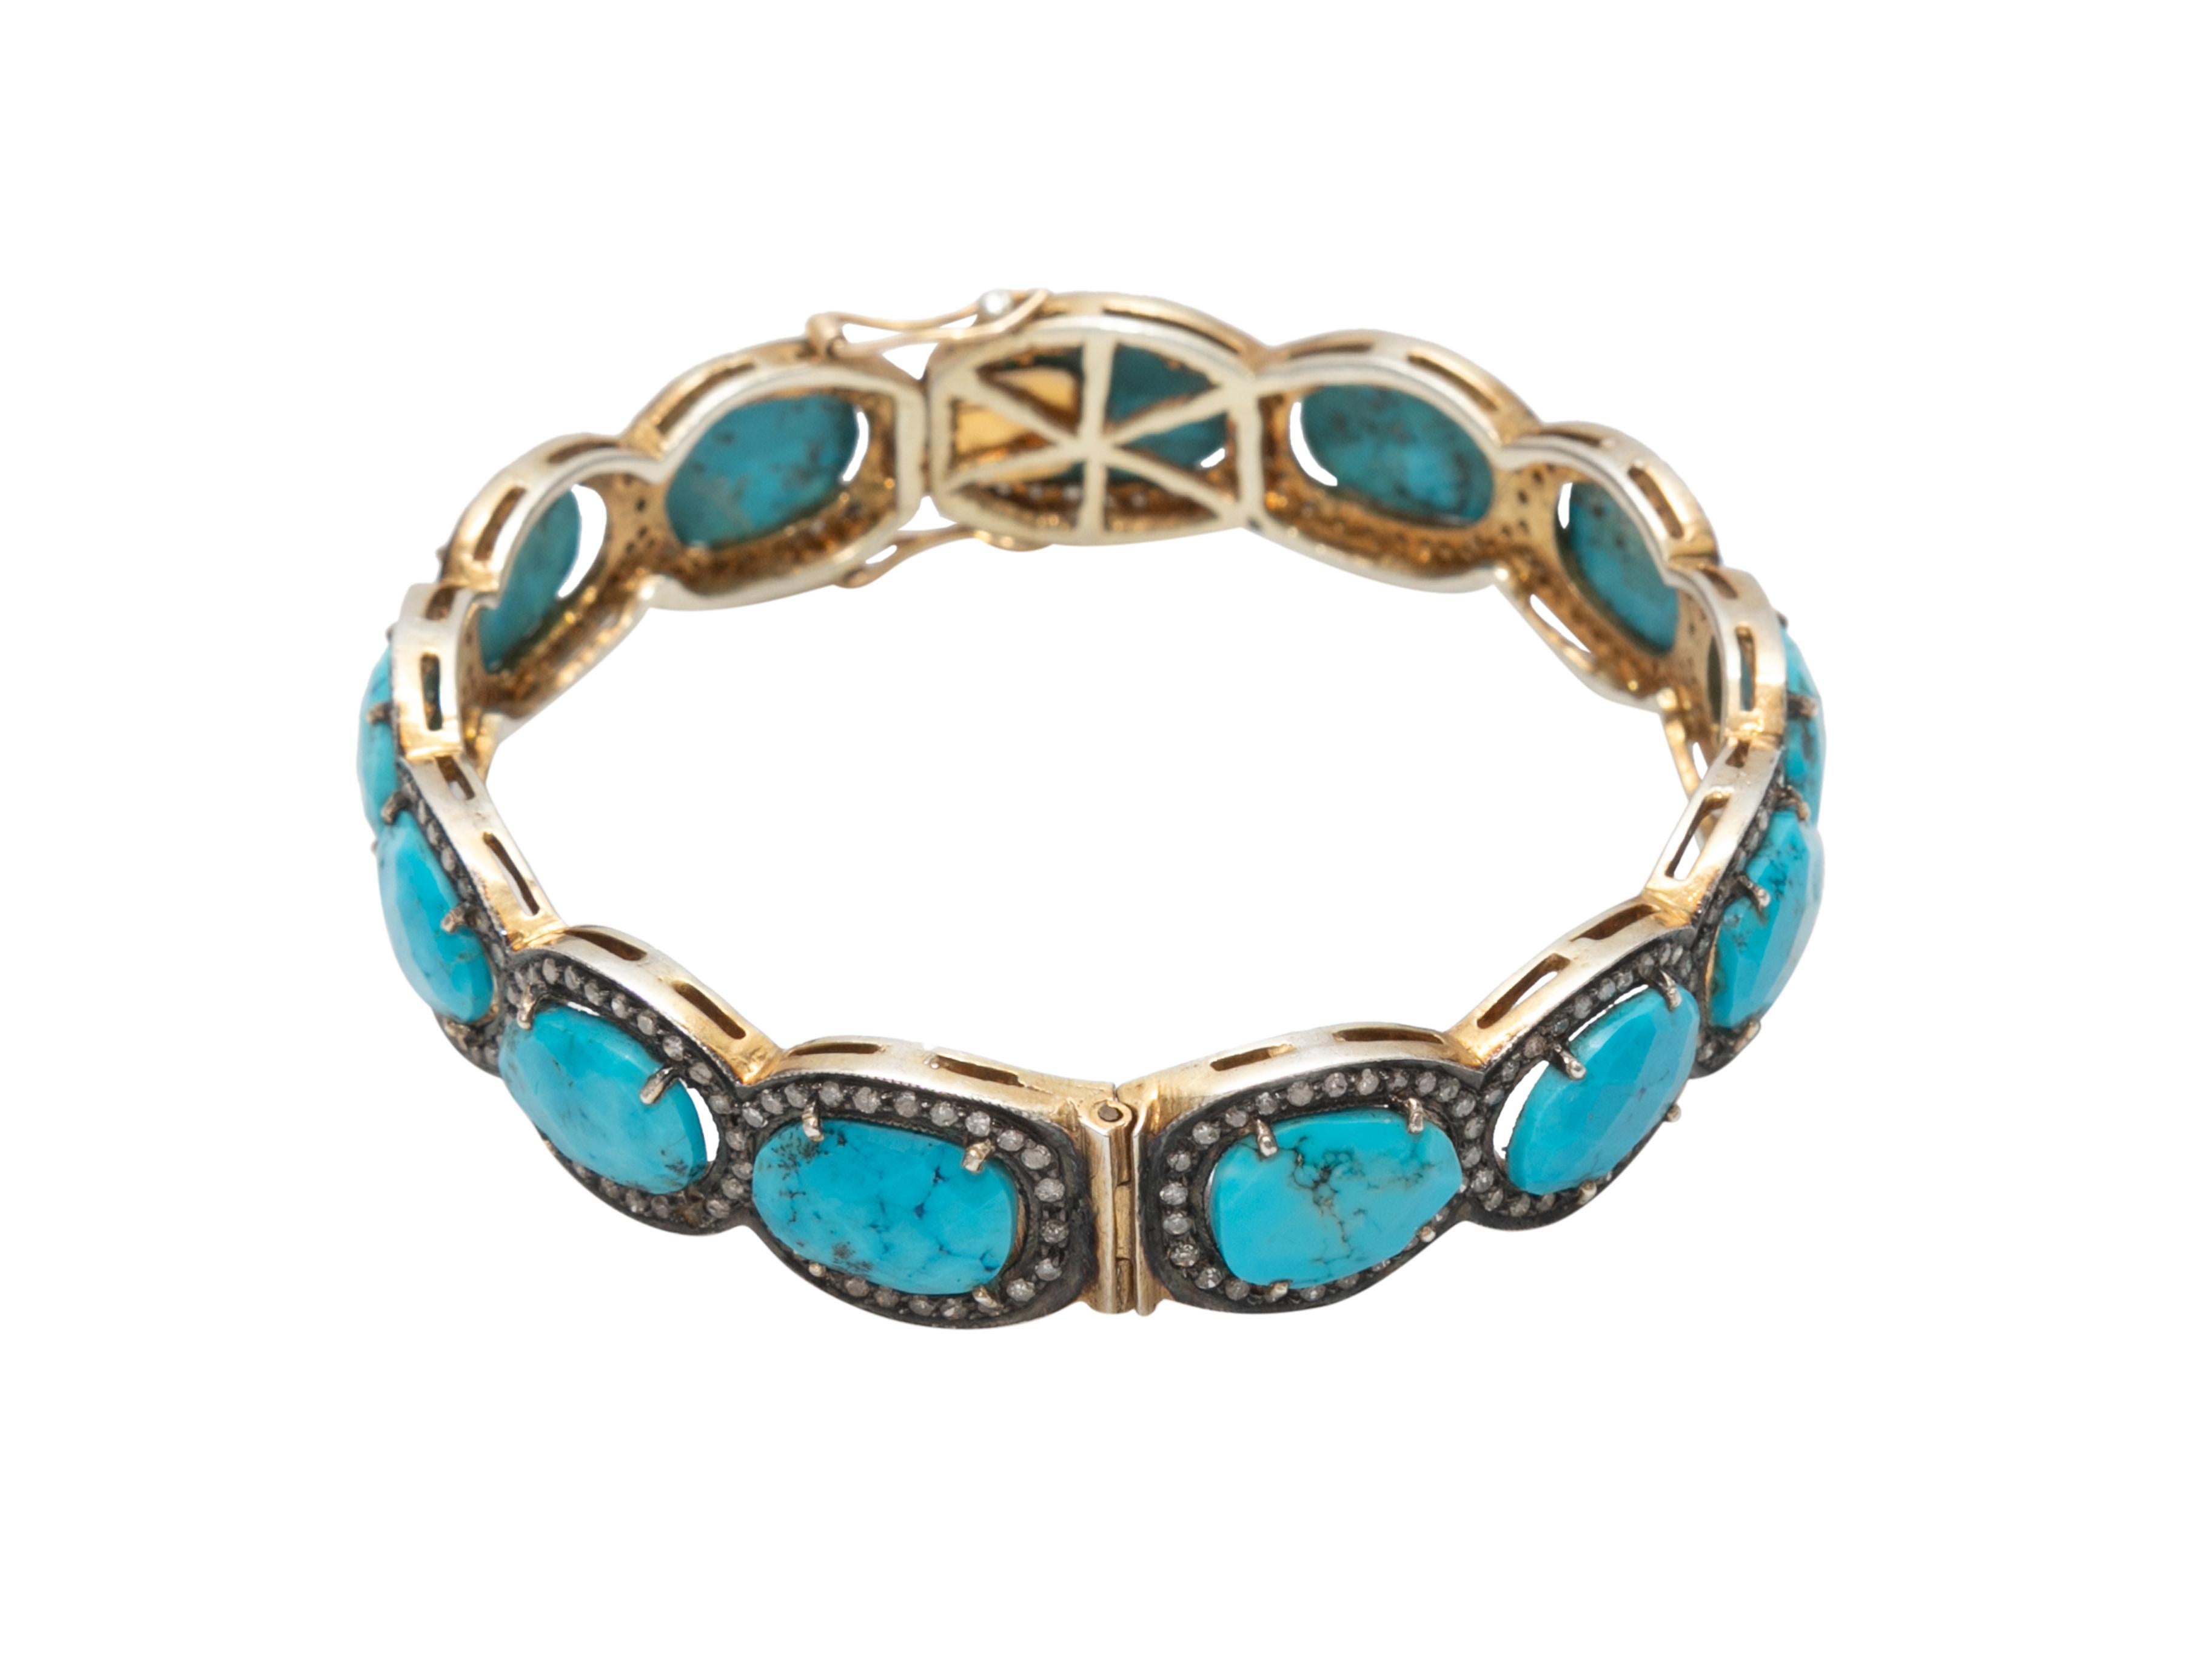 Gold turquoise and pave diamond cuff bracelet by Jennifer Miller.